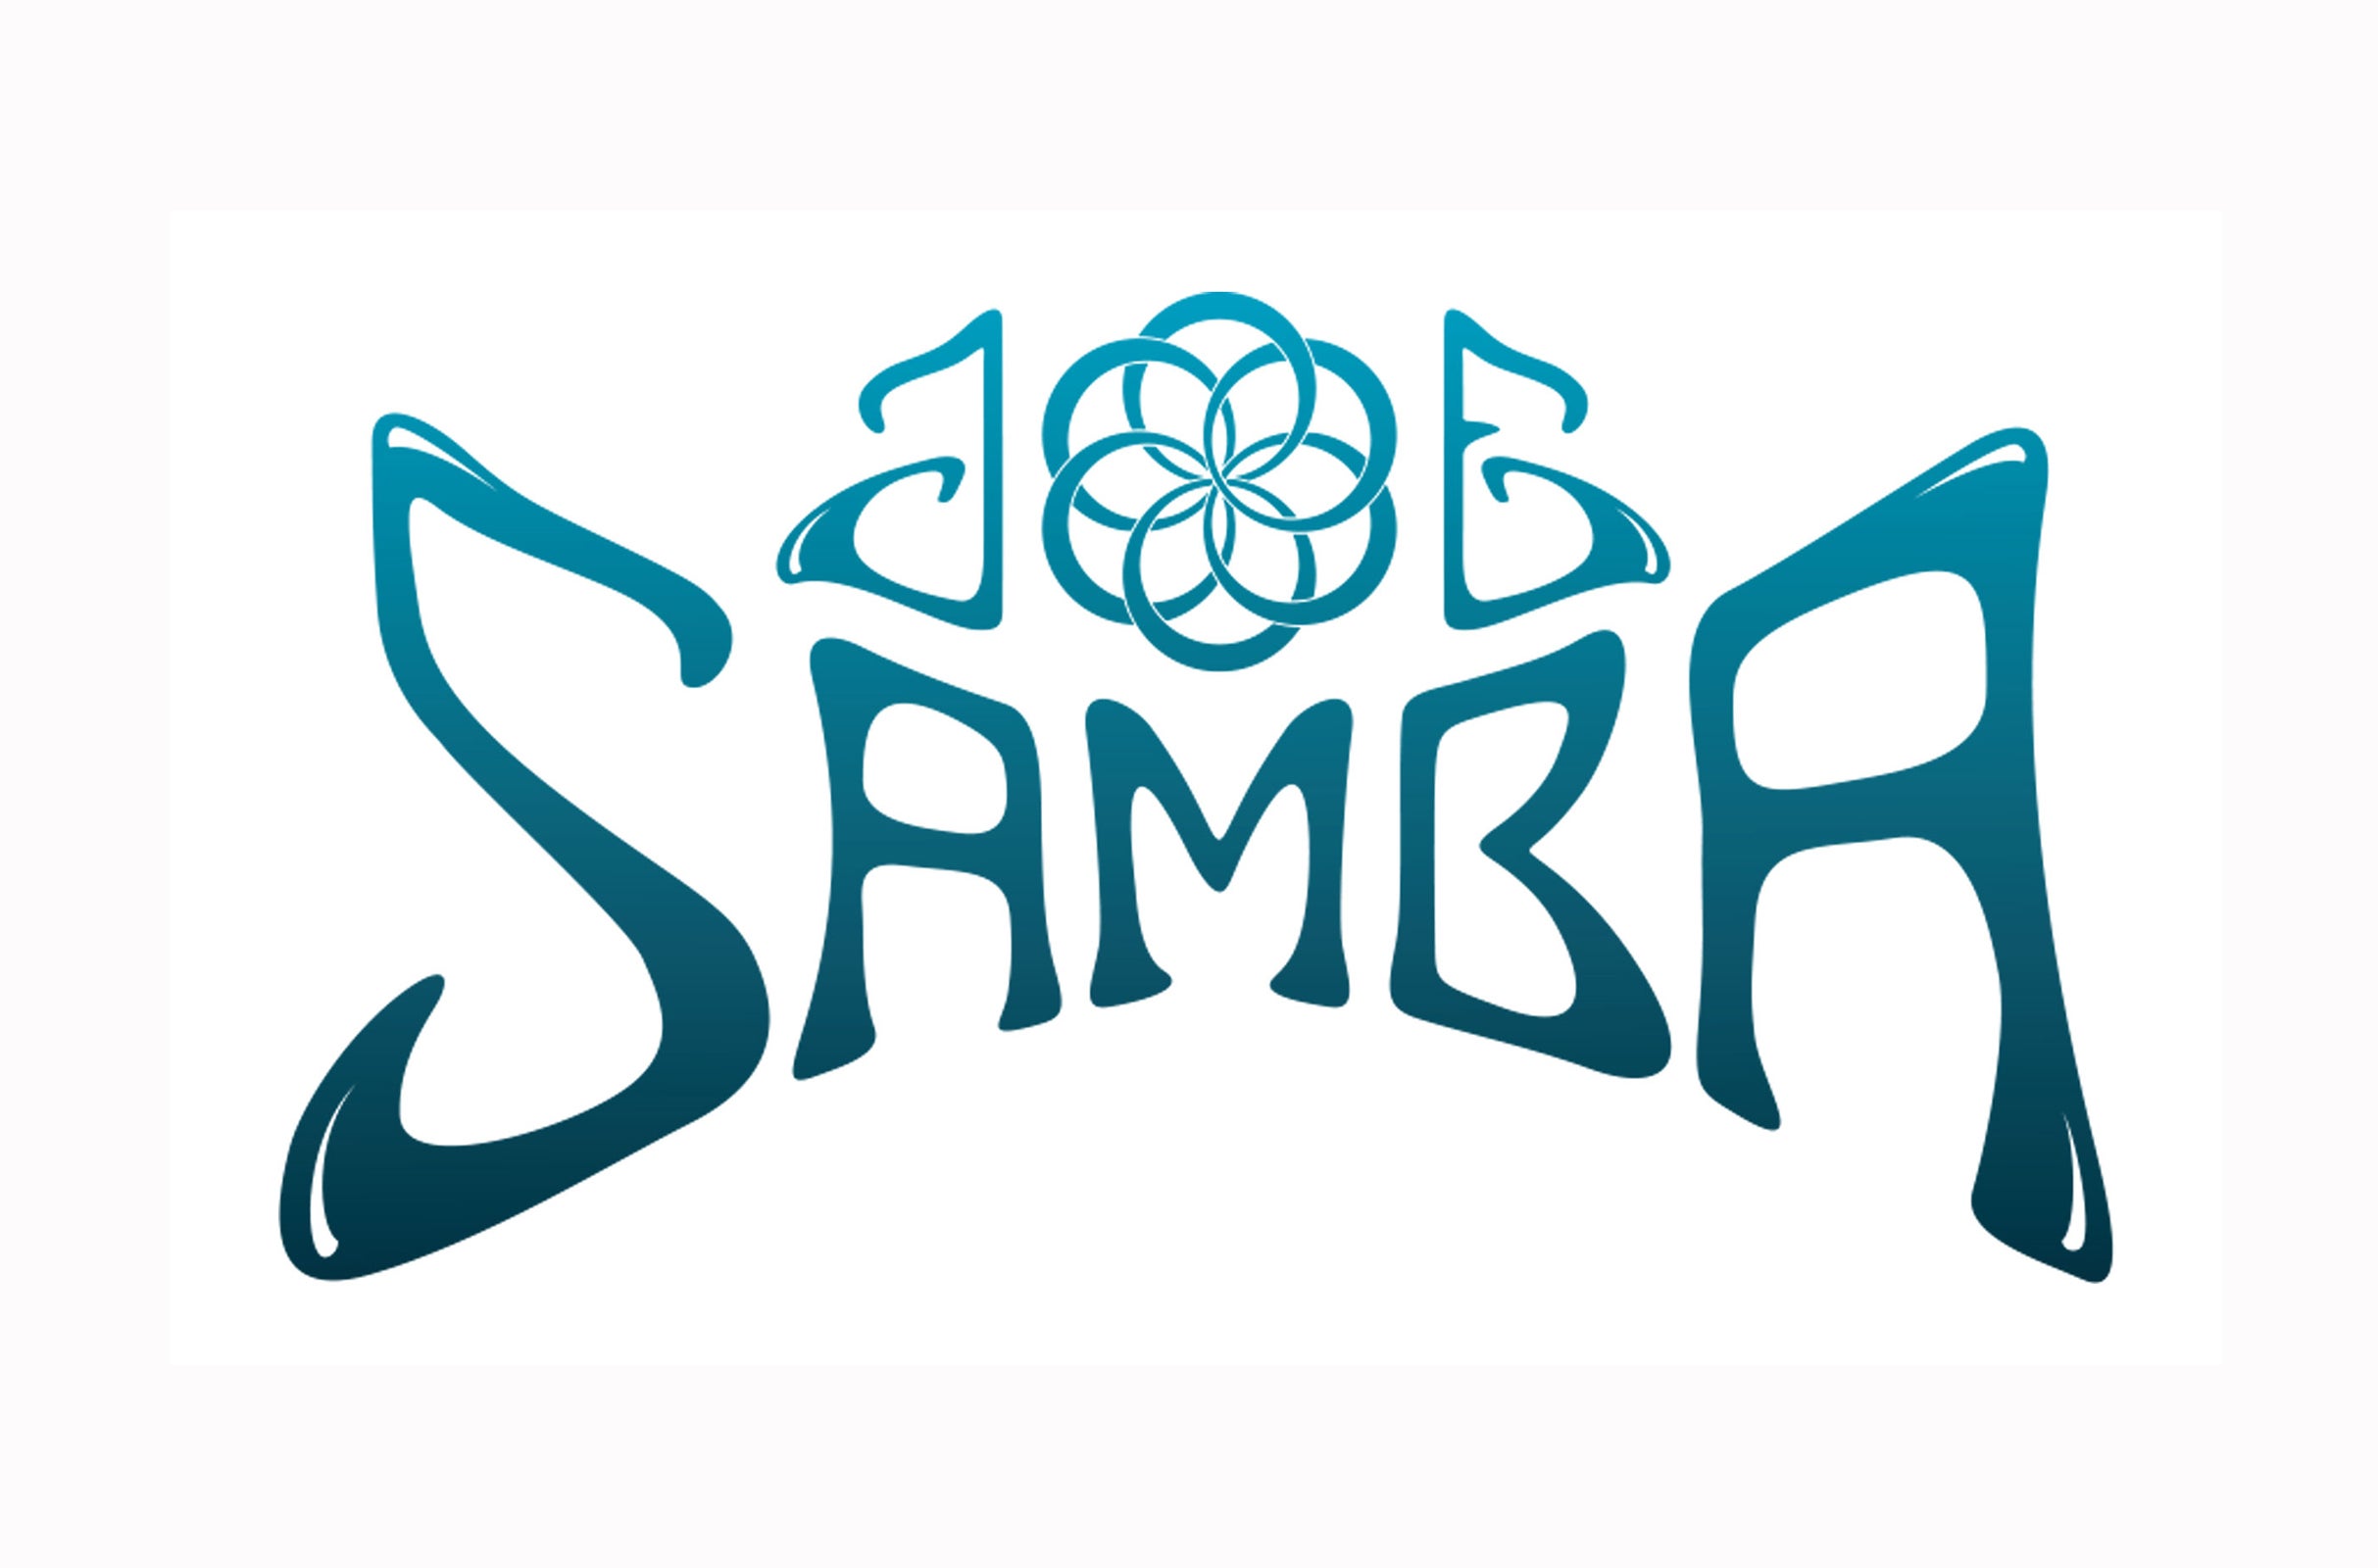 Granite Lion Presents: Joe Samba free presale passcode for early tickets in Hampton Beach